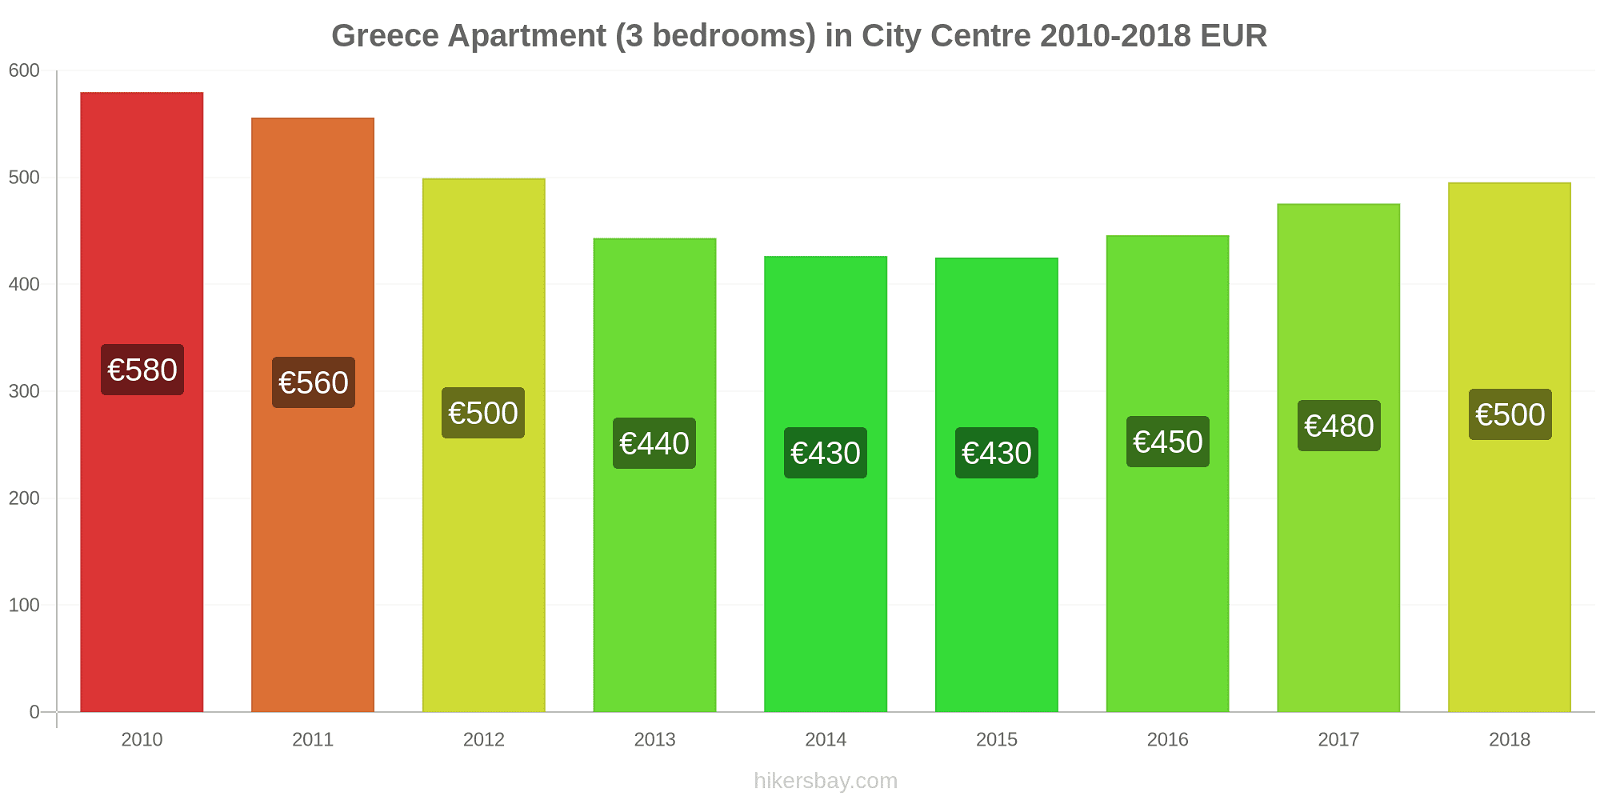 Greece price changes Apartment (3 bedrooms) in City Centre hikersbay.com